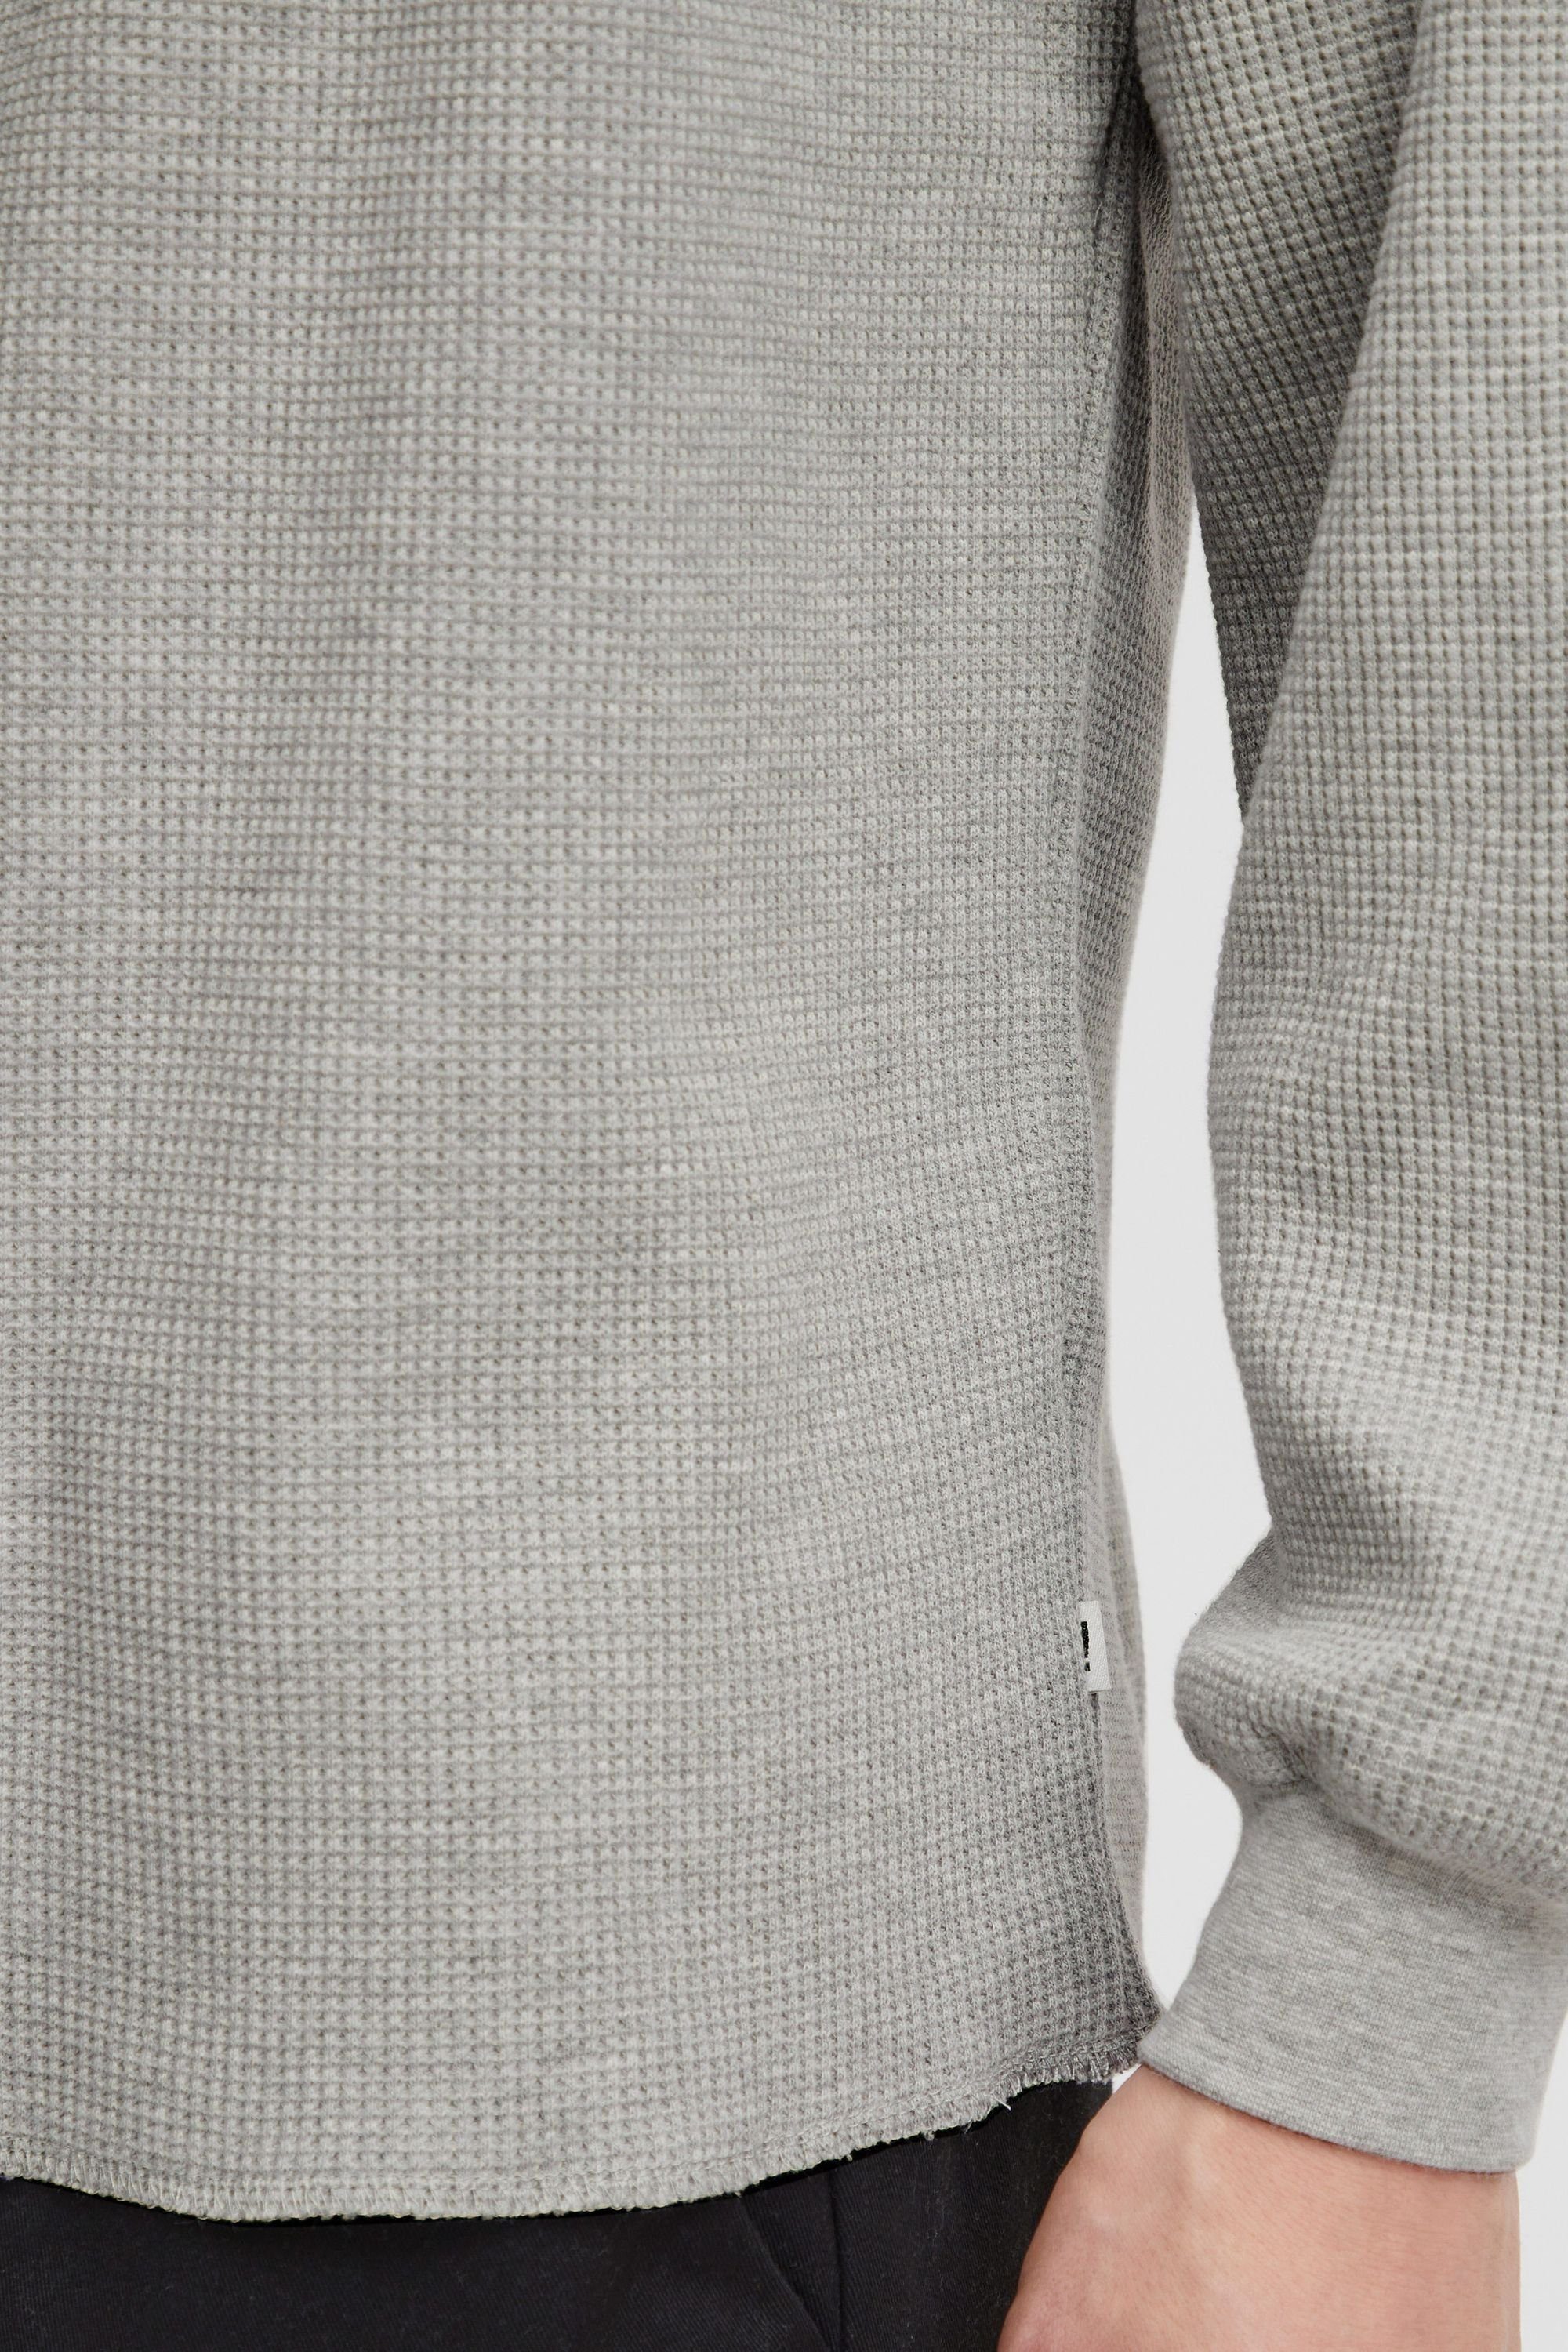 Solid Sweatshirt 21107770 Melange SDFletcher Grey (1541011) - Light